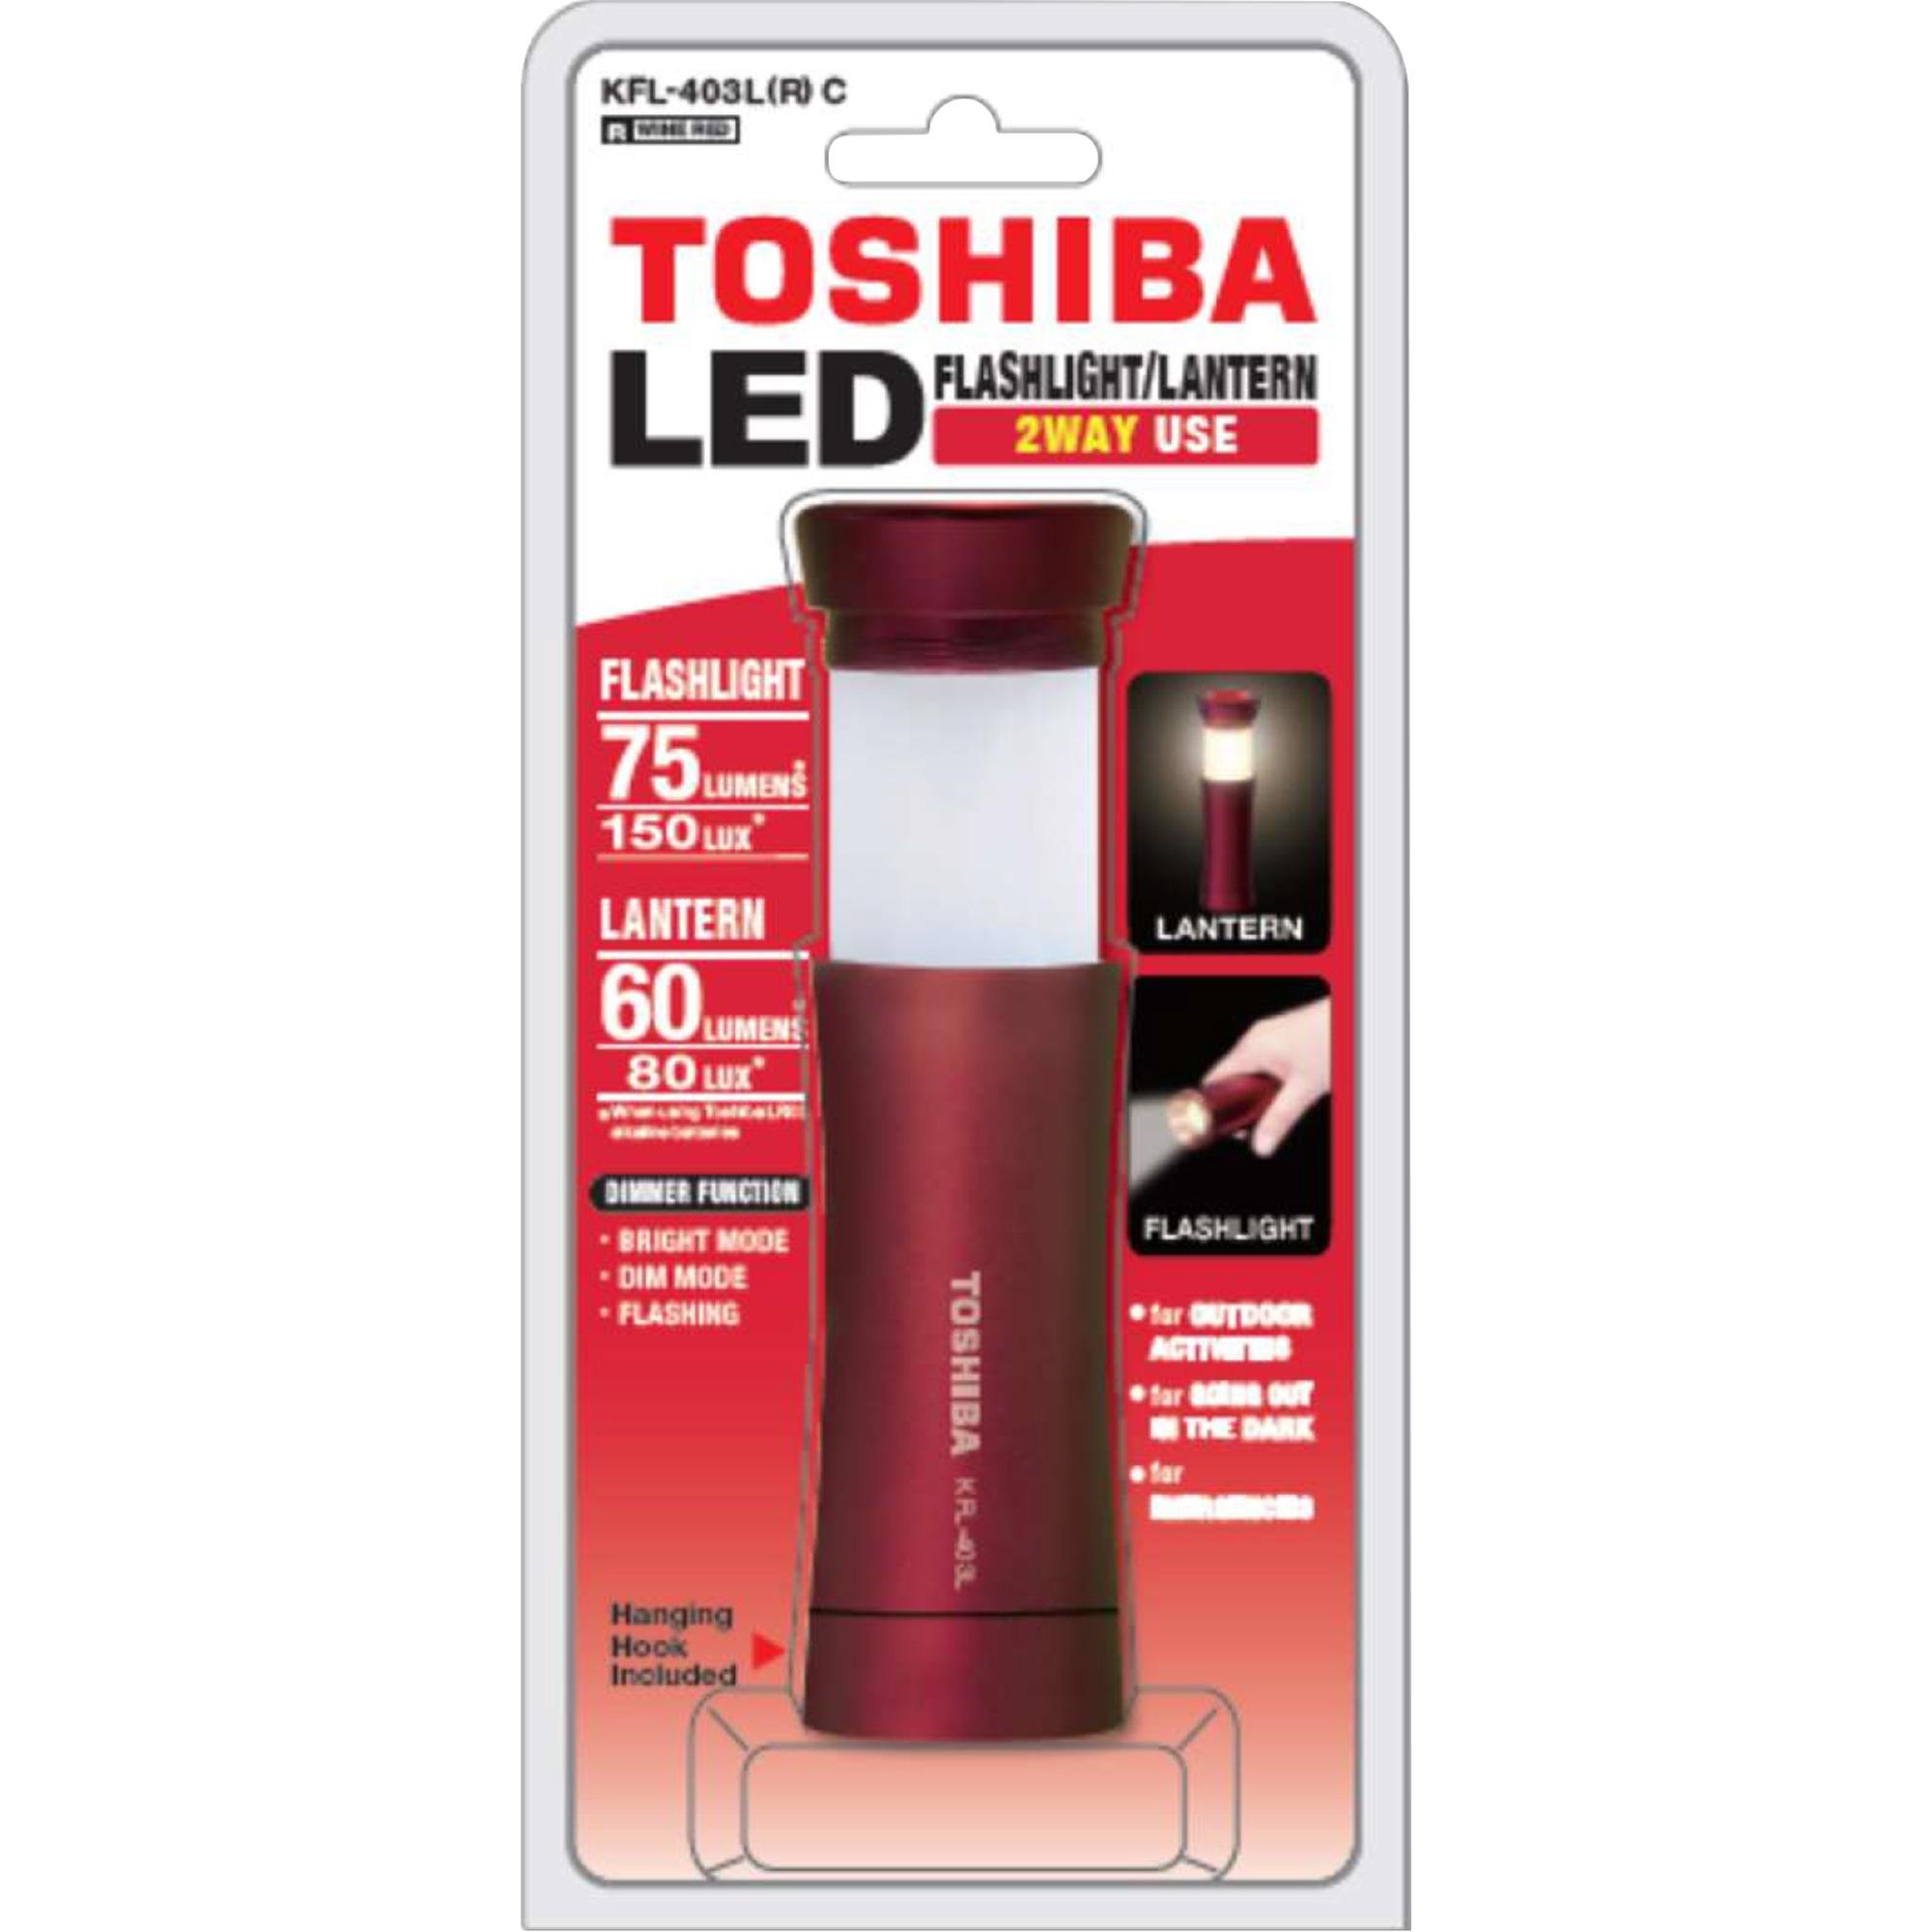 Lanterna Toshiba 2WAY KFL-403L Vermelha